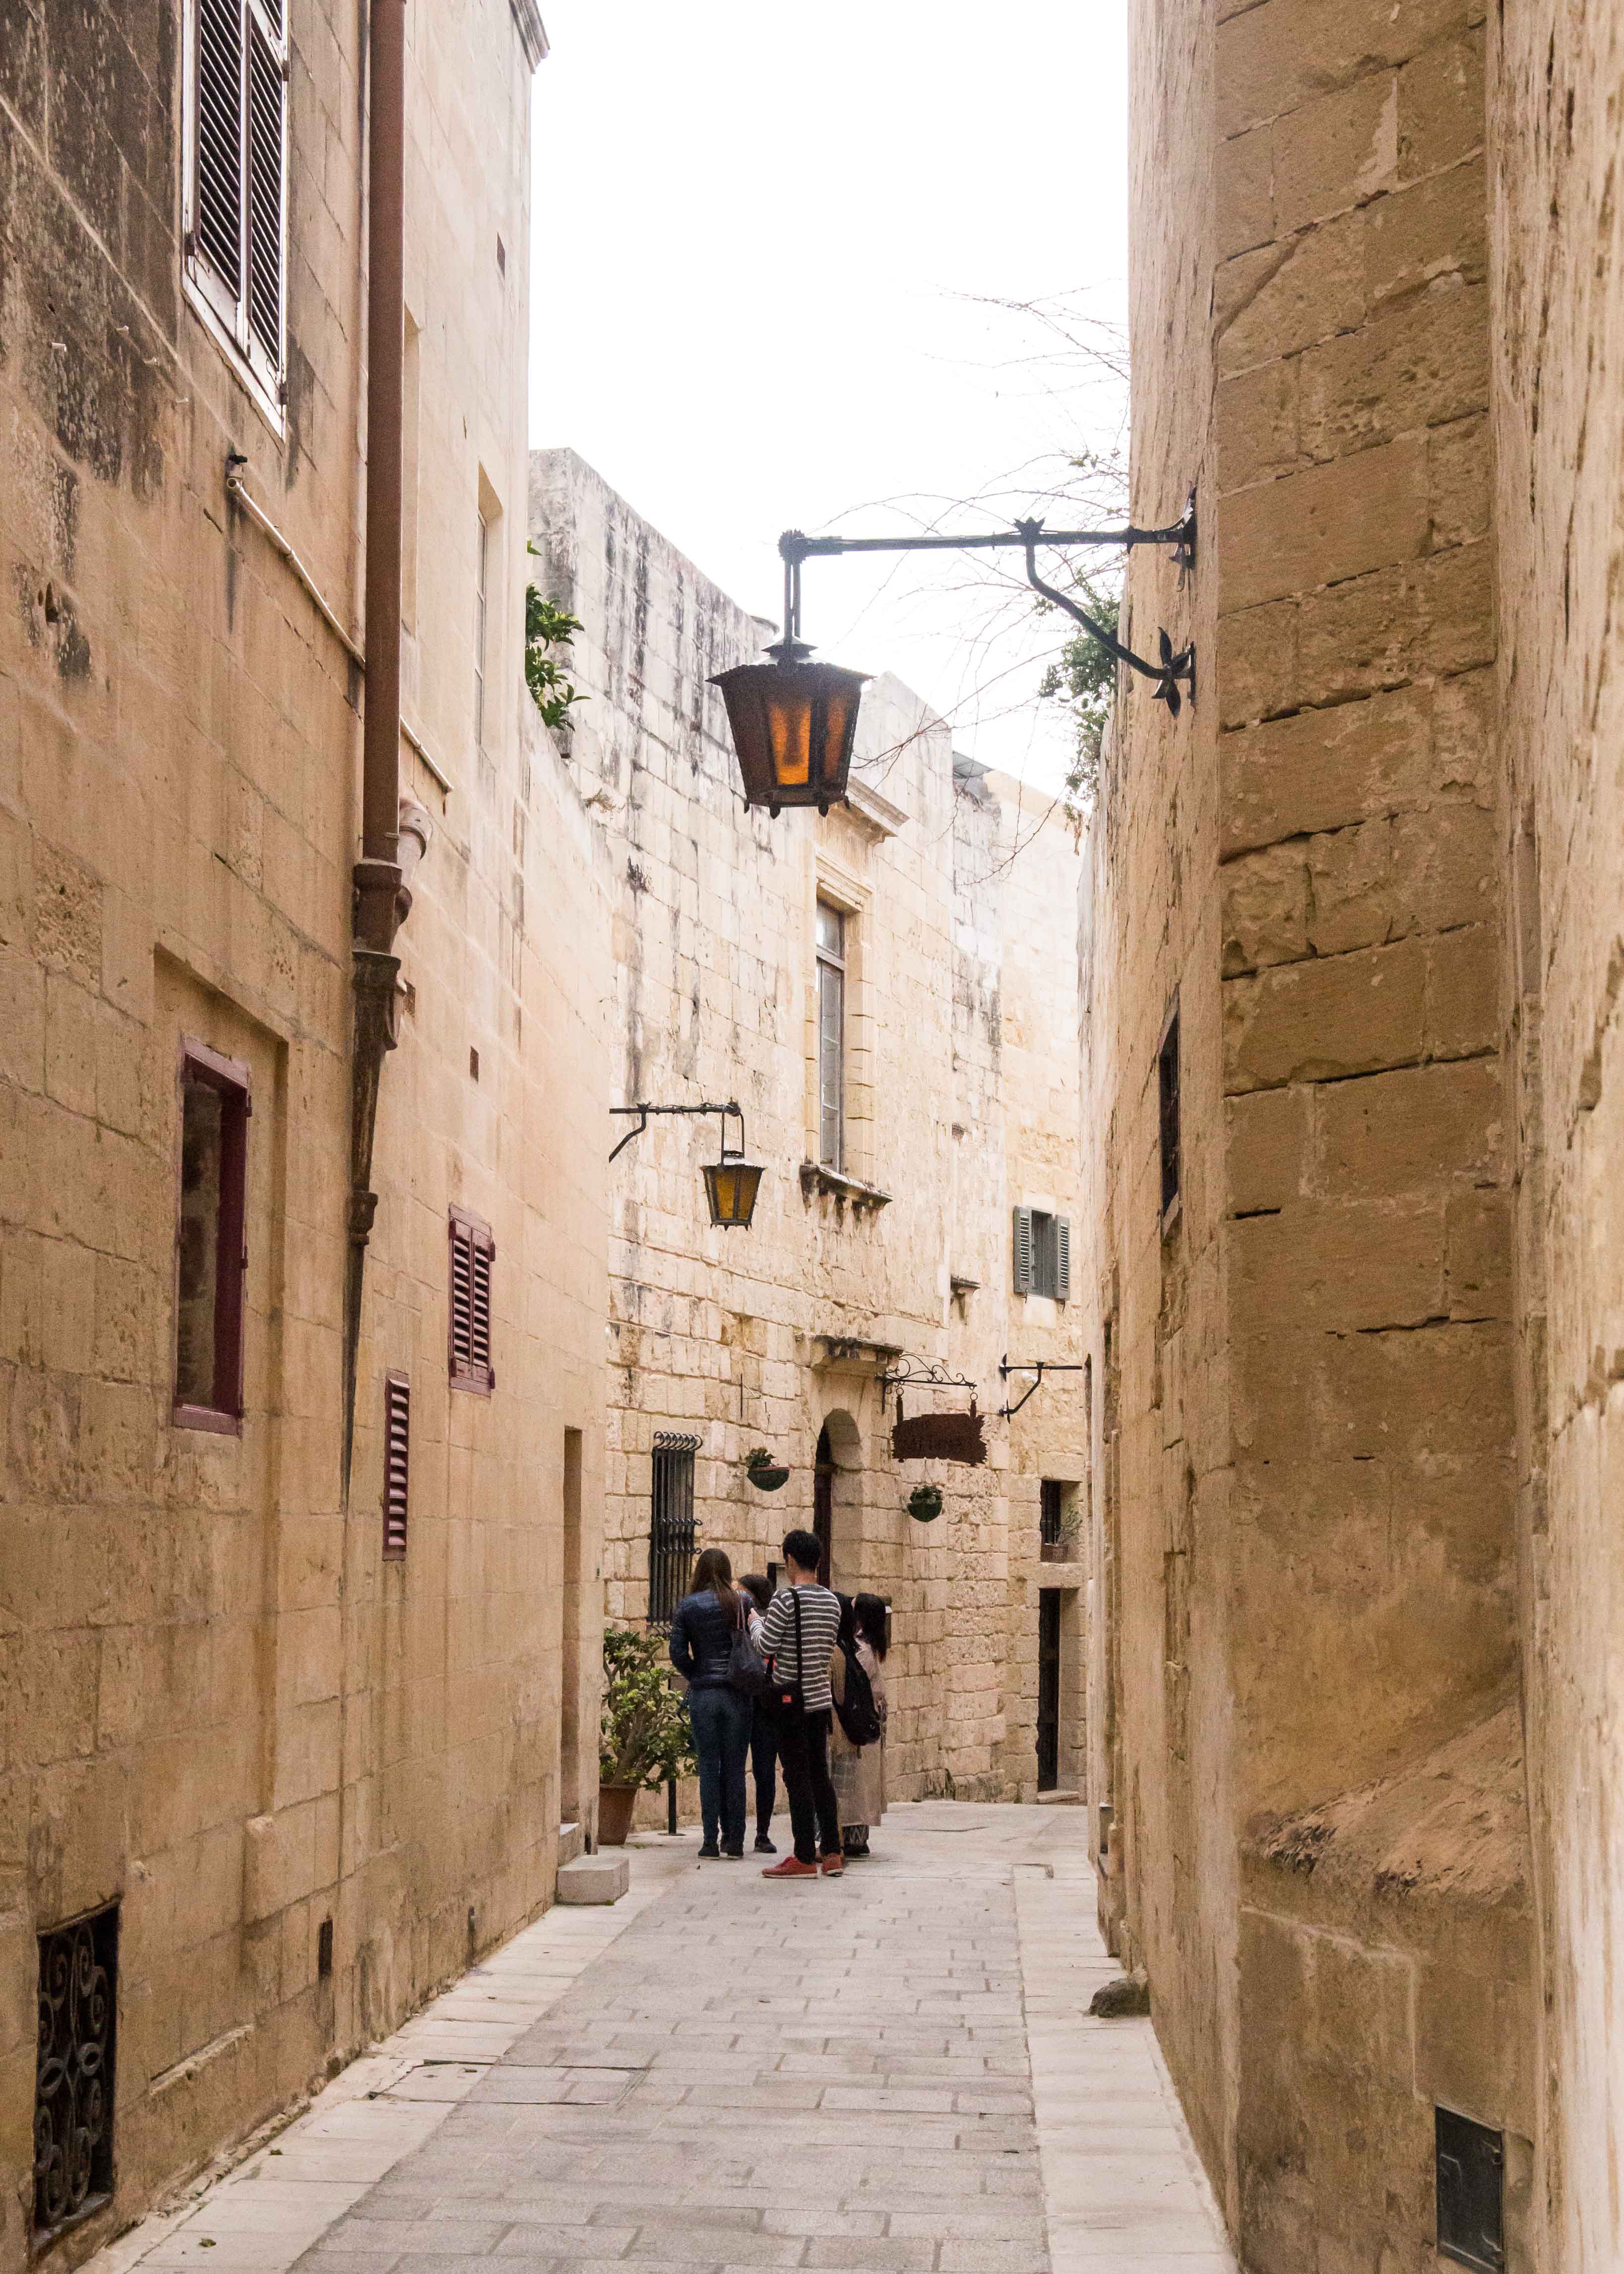 The street of Mdina, Mdina Gate, the old capital of Malta